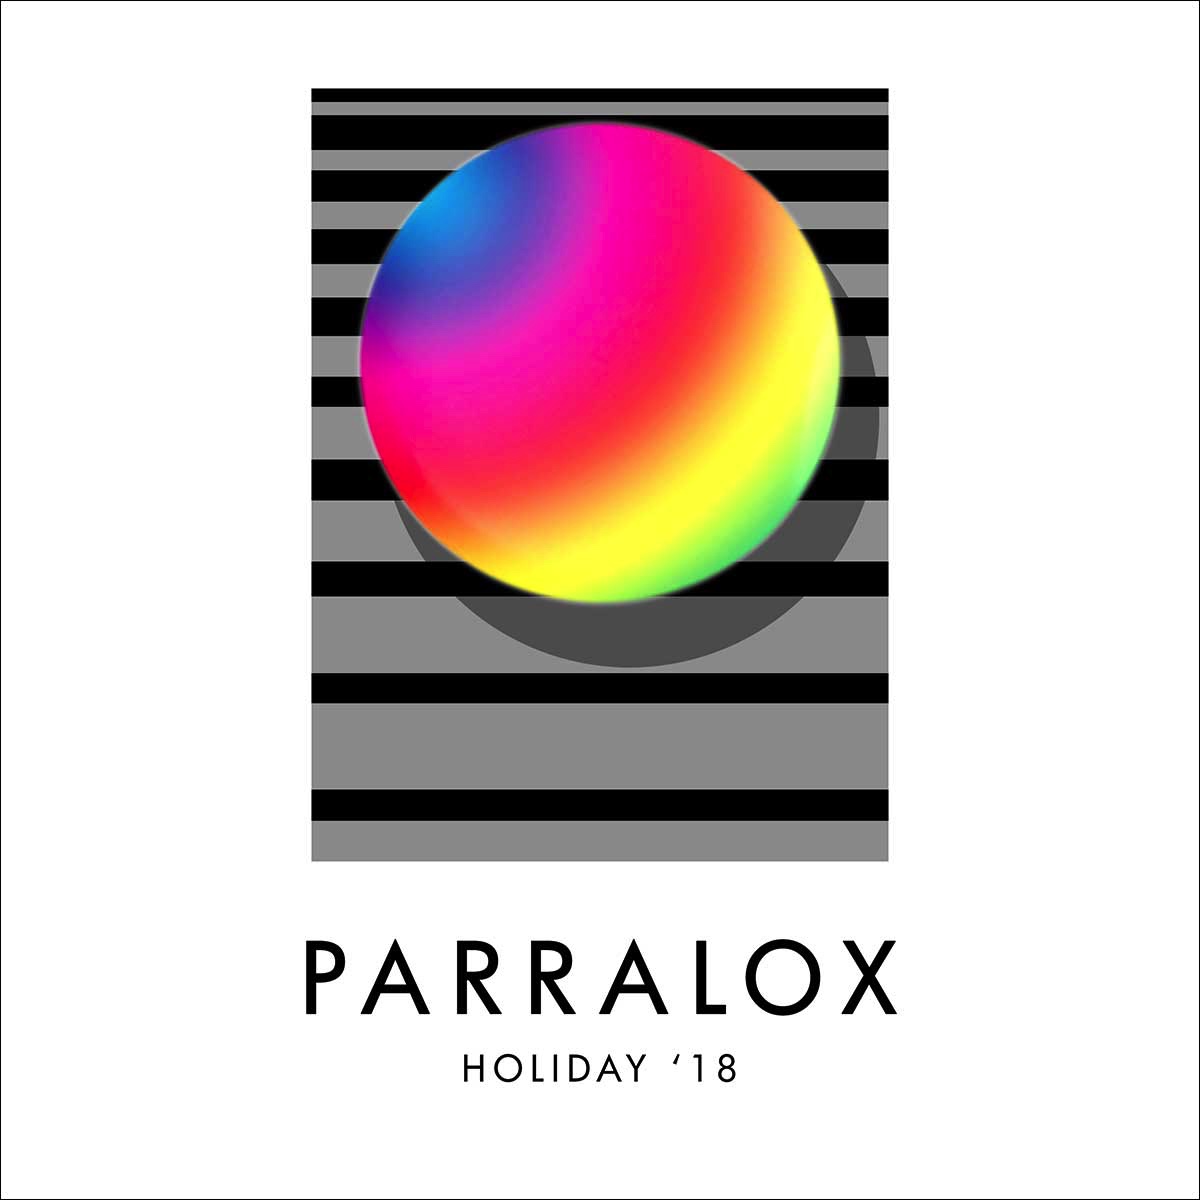 26. Parralox Holiday 18